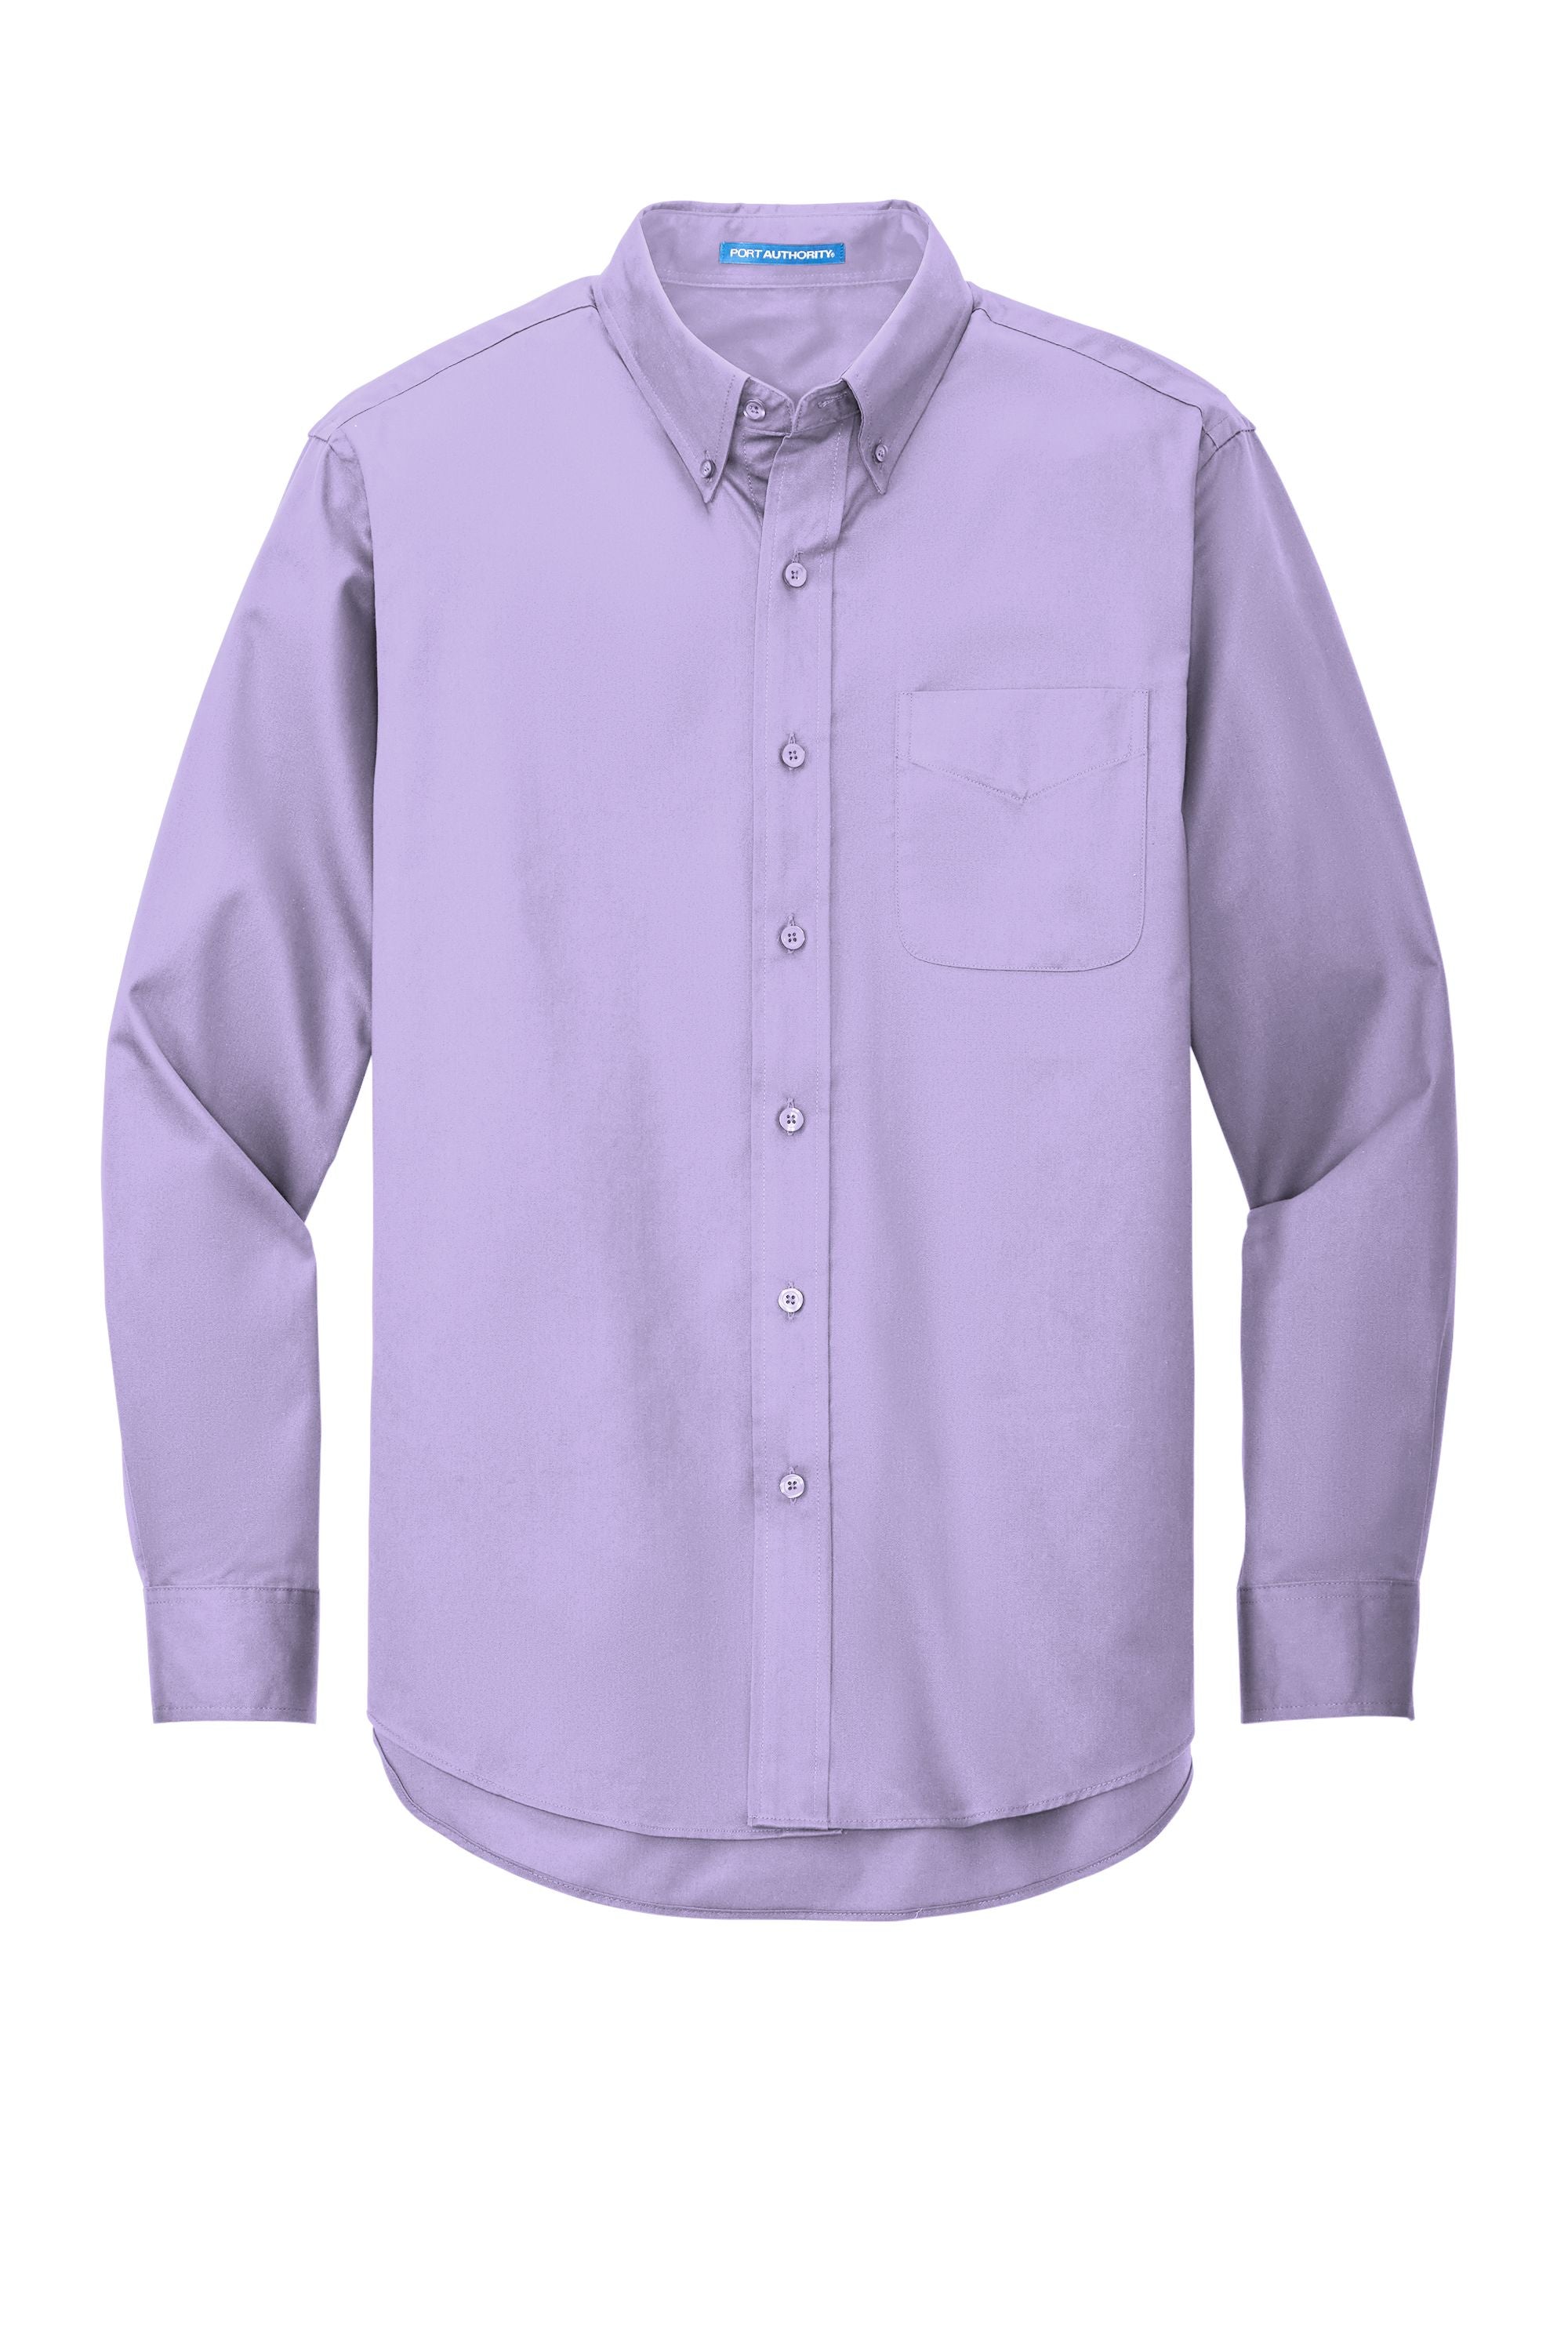 Monogrammed Button Down Shirt